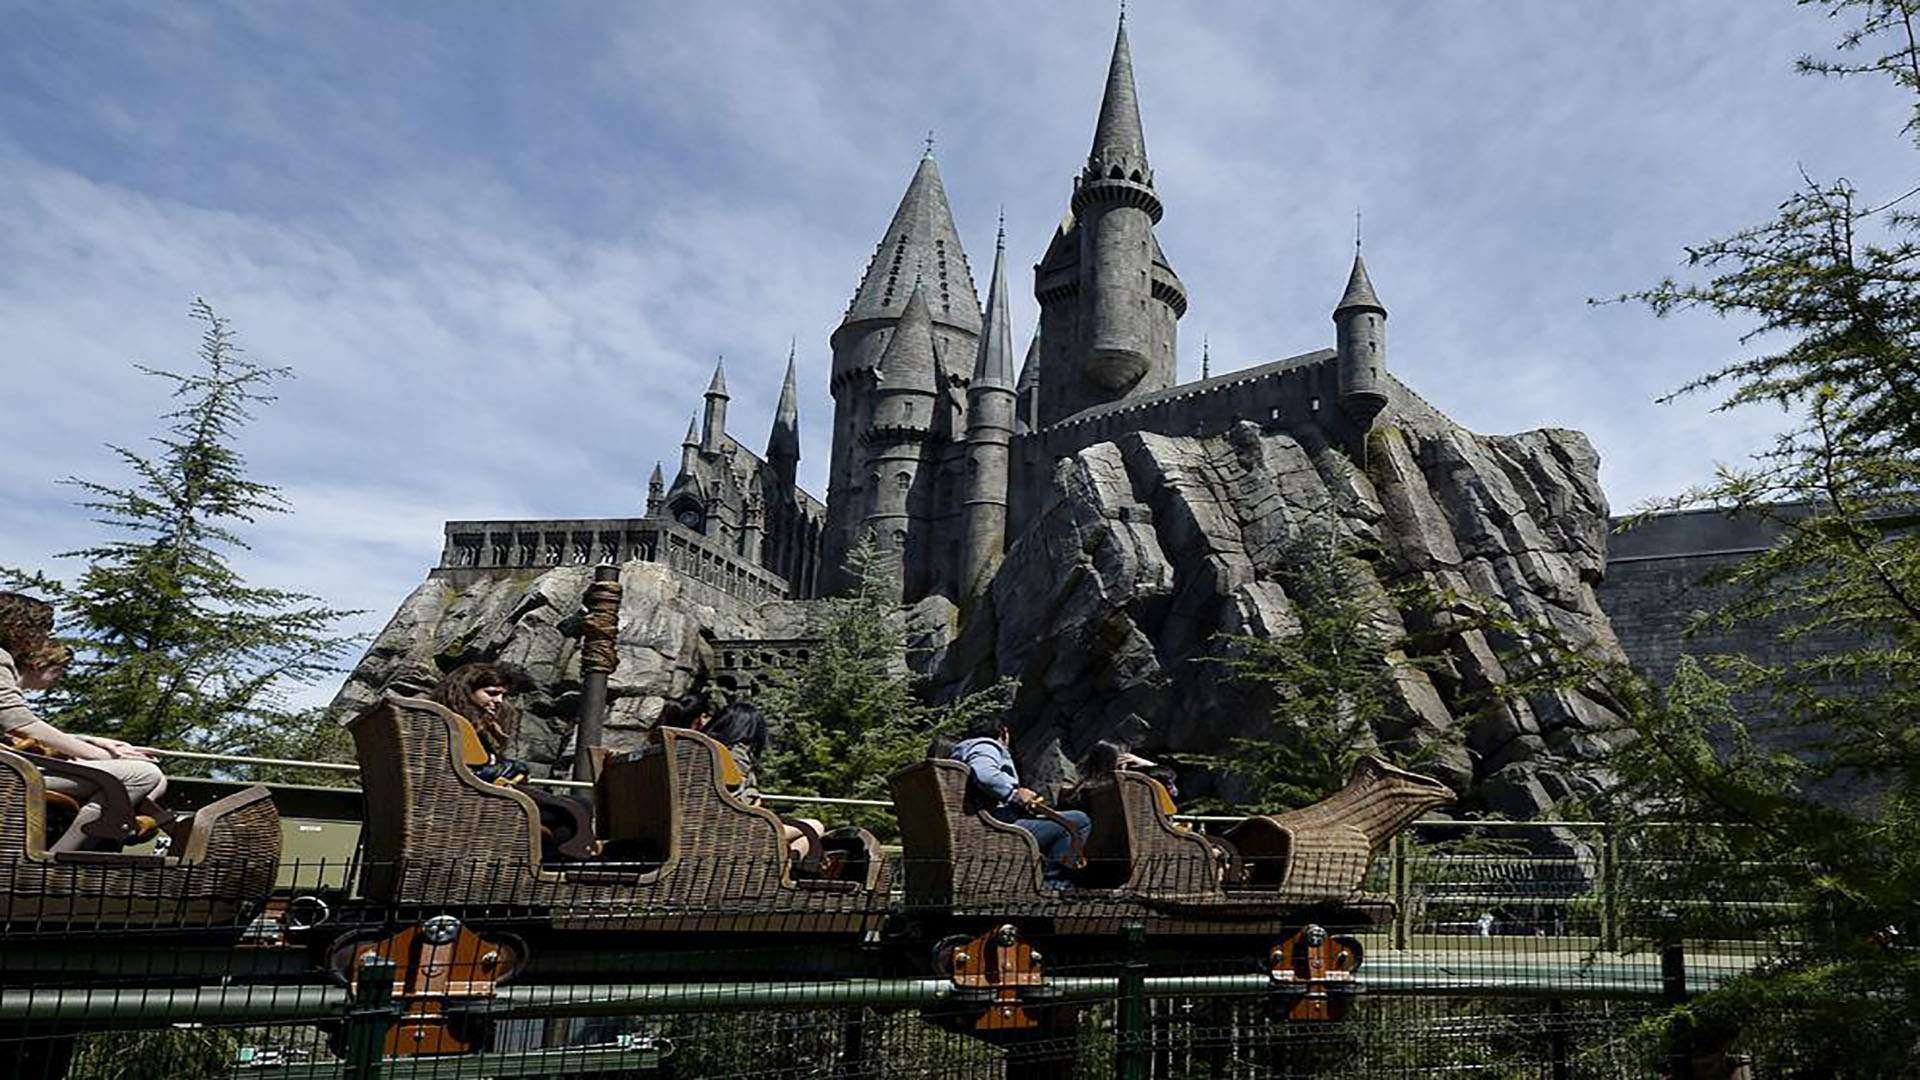 Harry Potter Theme Park Orlando in Florida